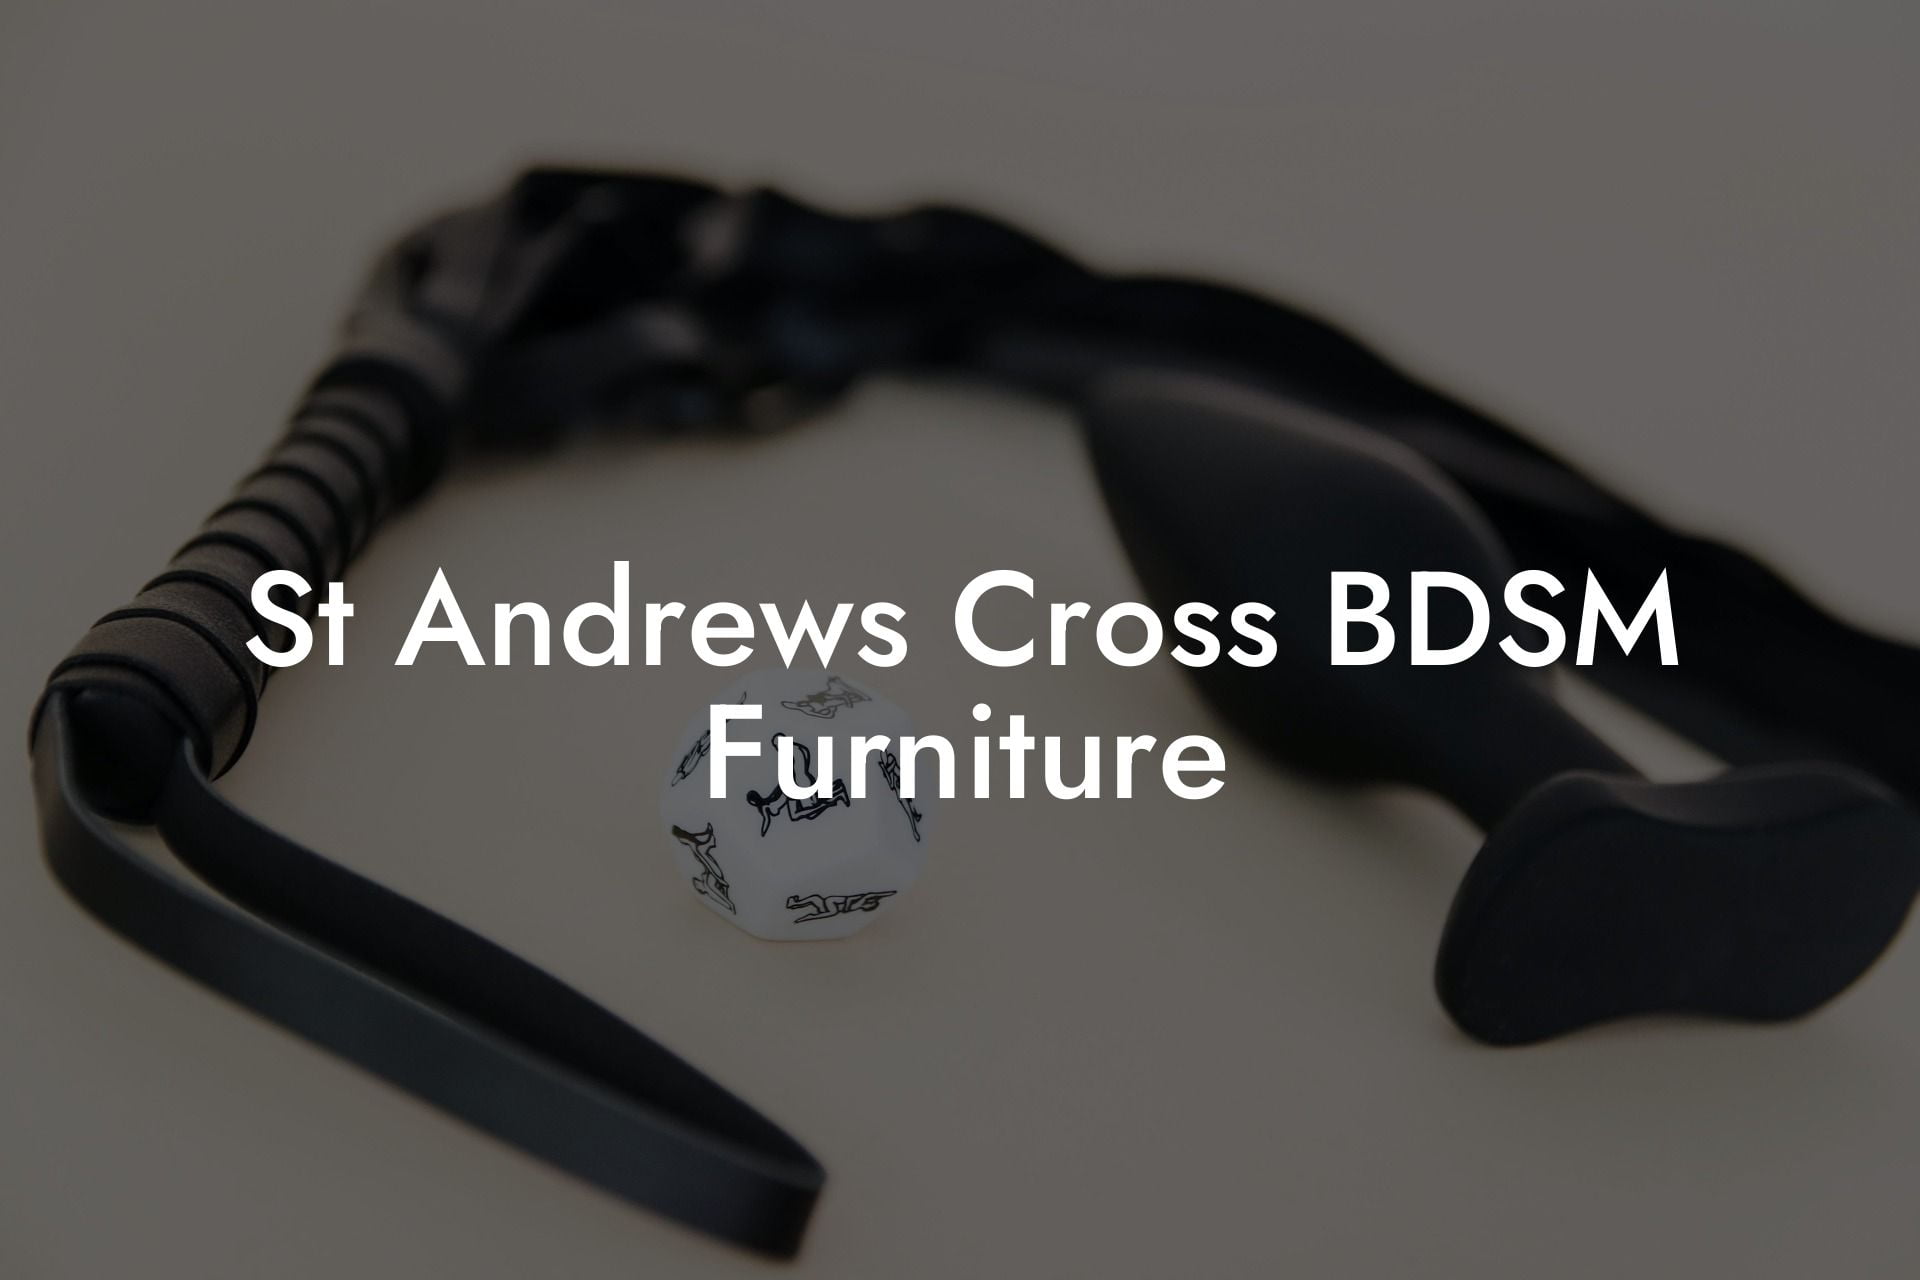 St Andrews Cross BDSM Furniture